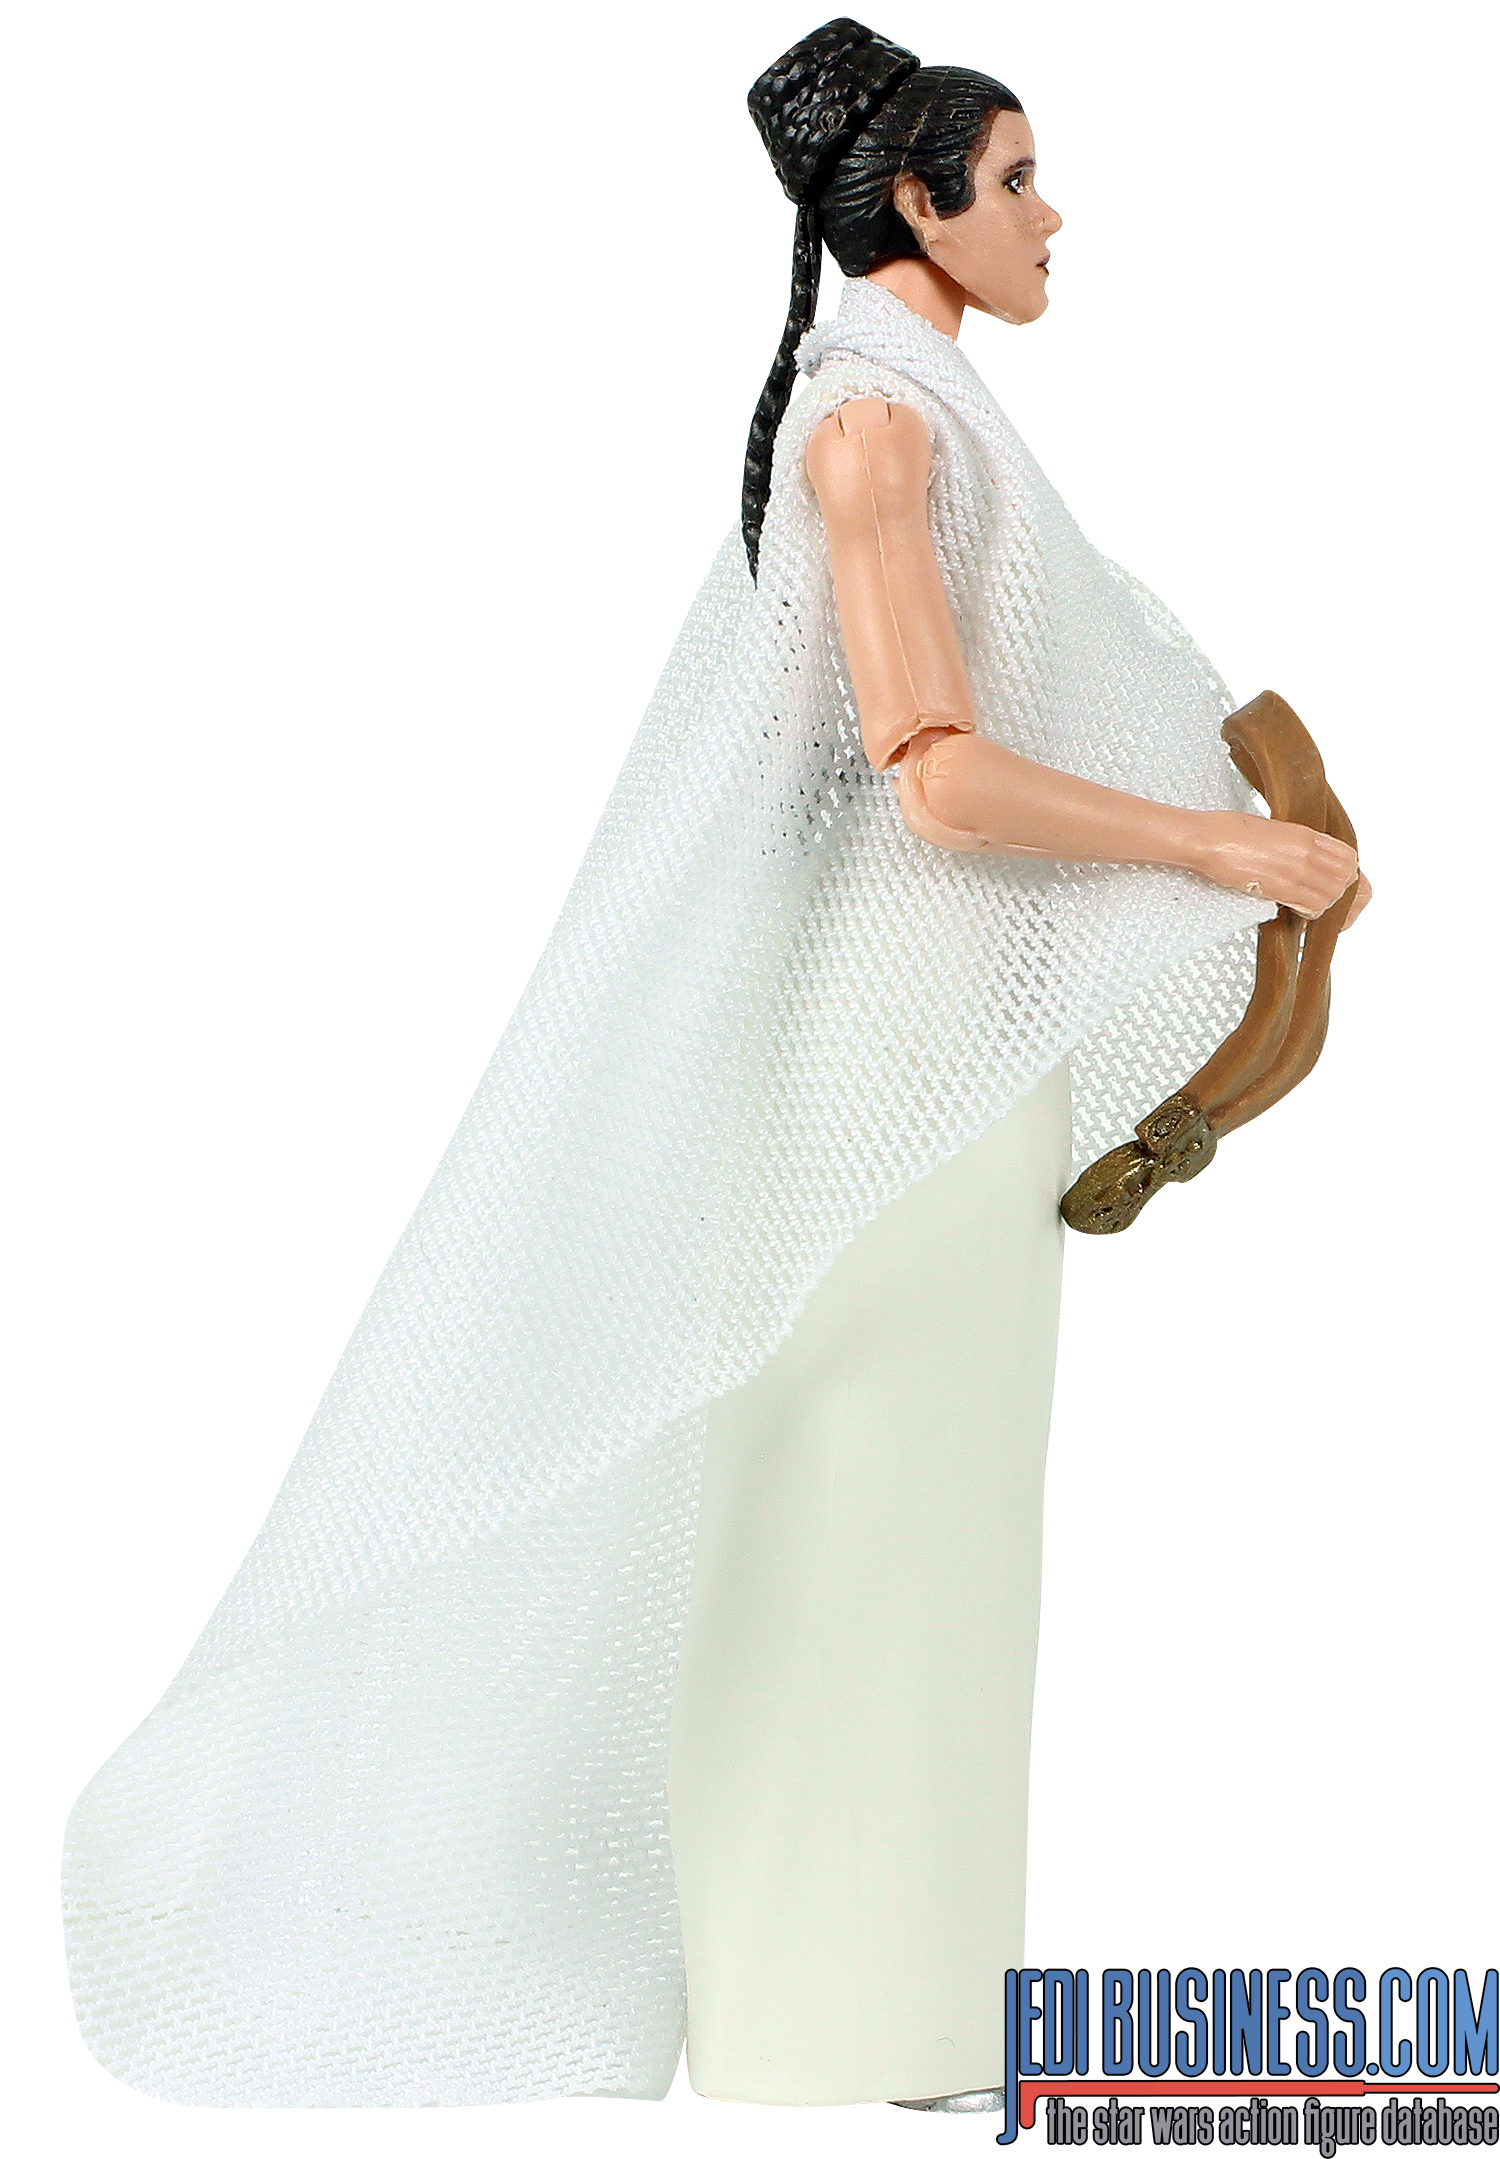 Princess Leia Organa Yavin